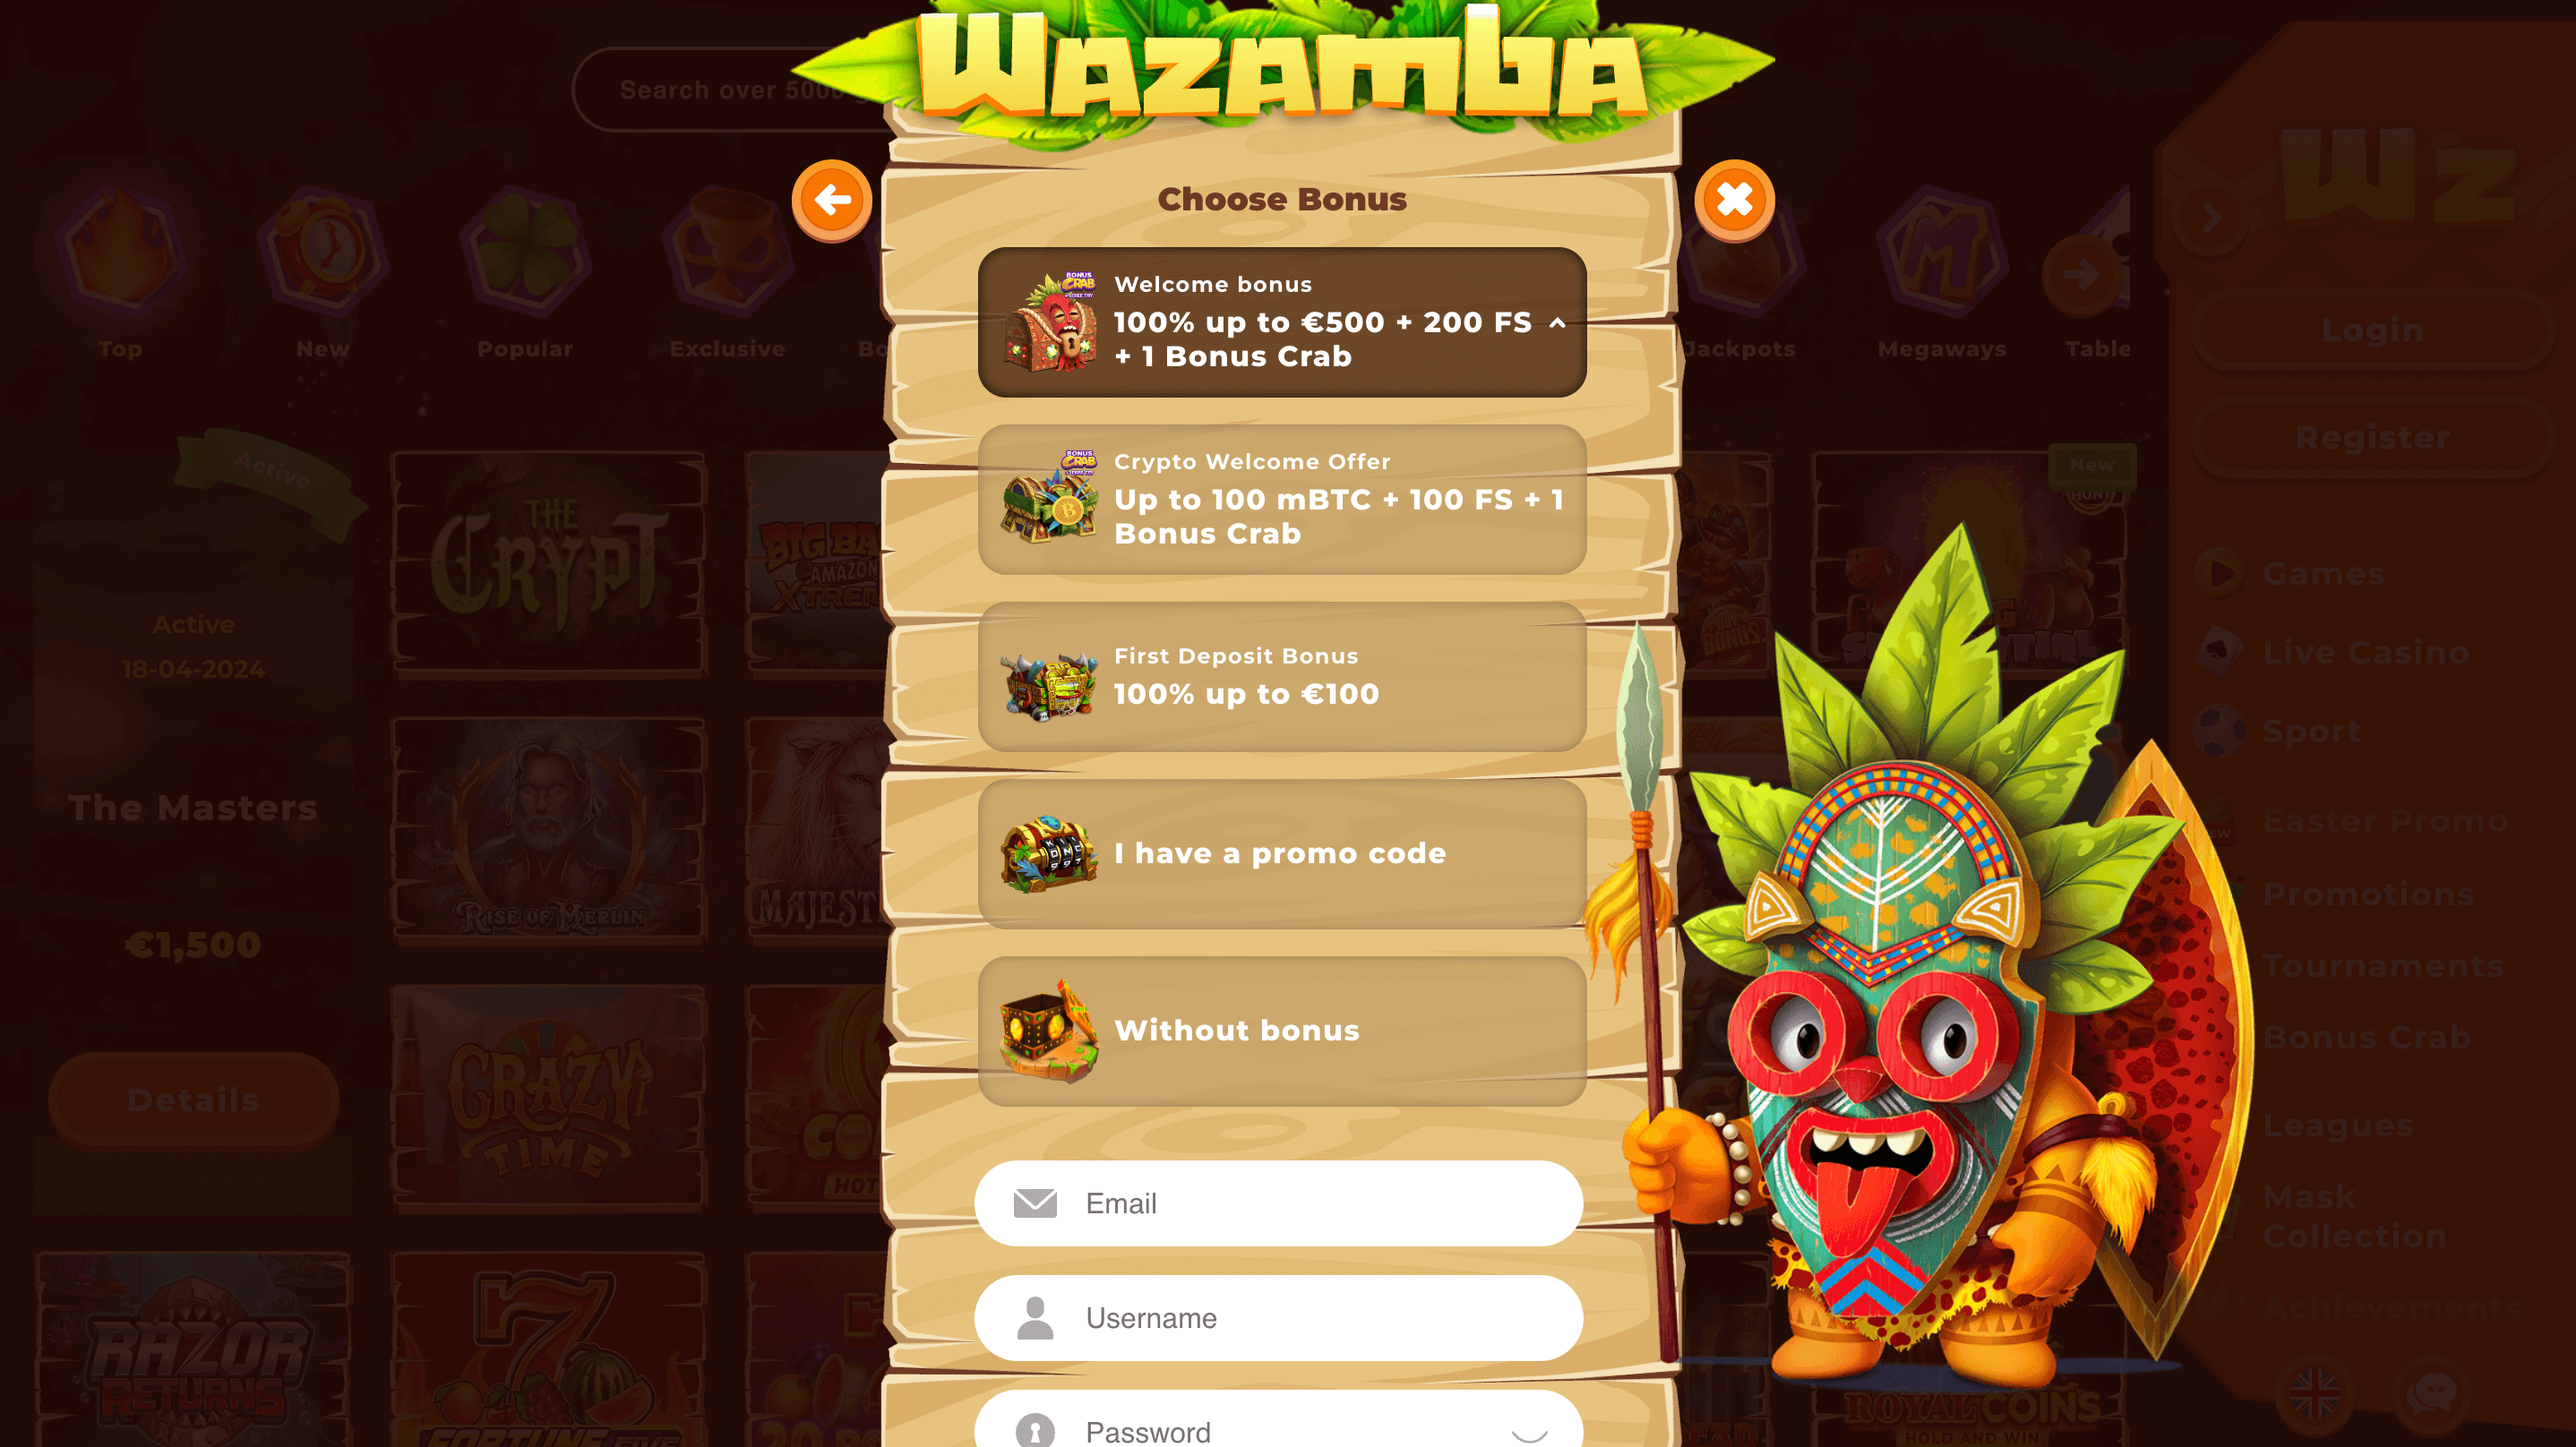 Wazamba choose welcome bonus